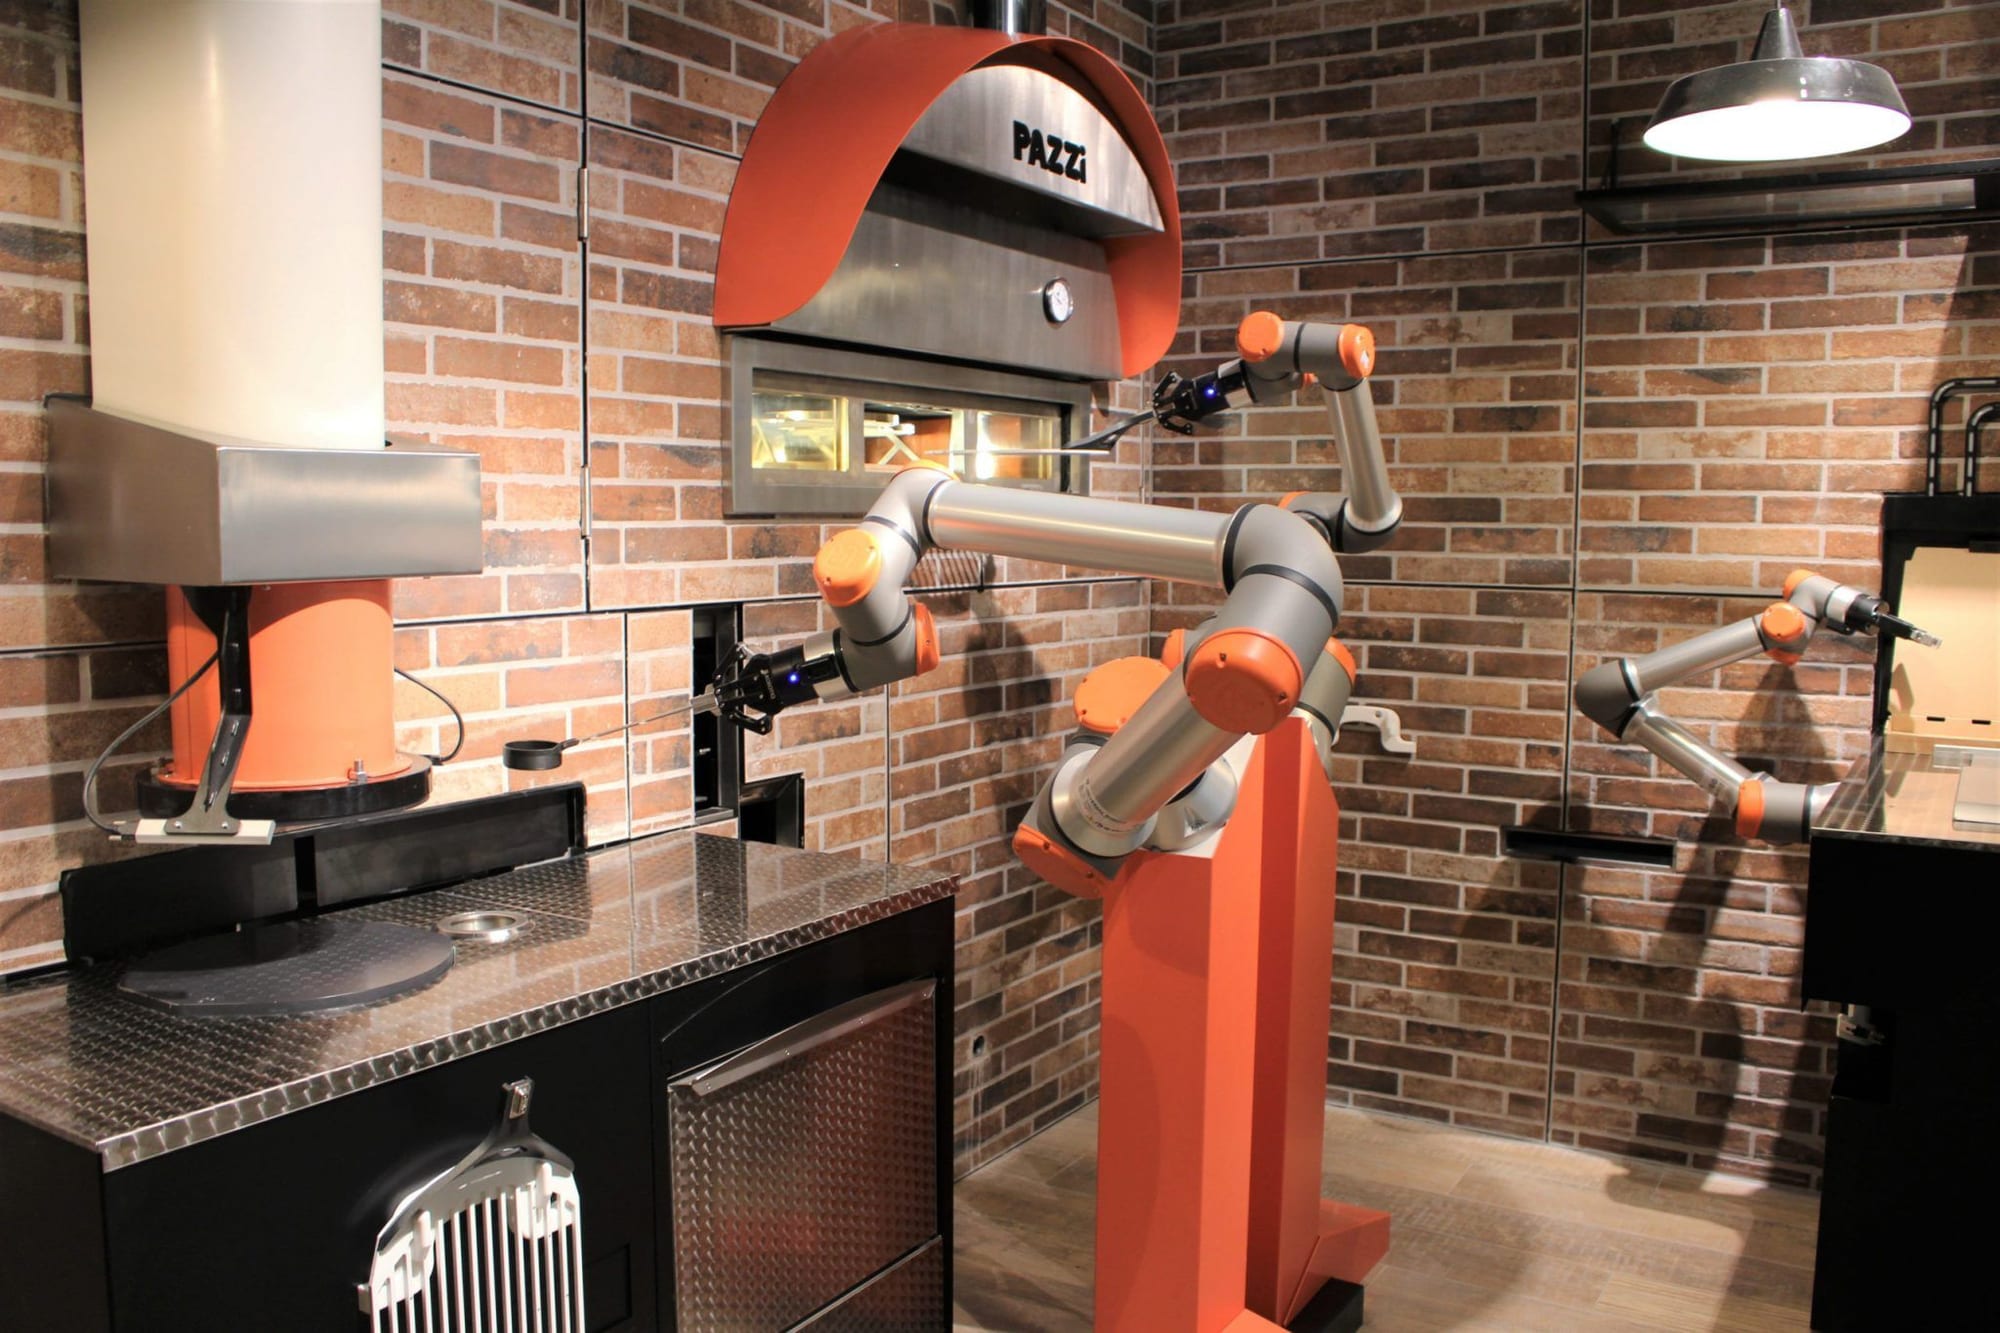 Large orange robotic arm inside Paris' Pazzi pizzeria works hard to whip up some tasty pies. 